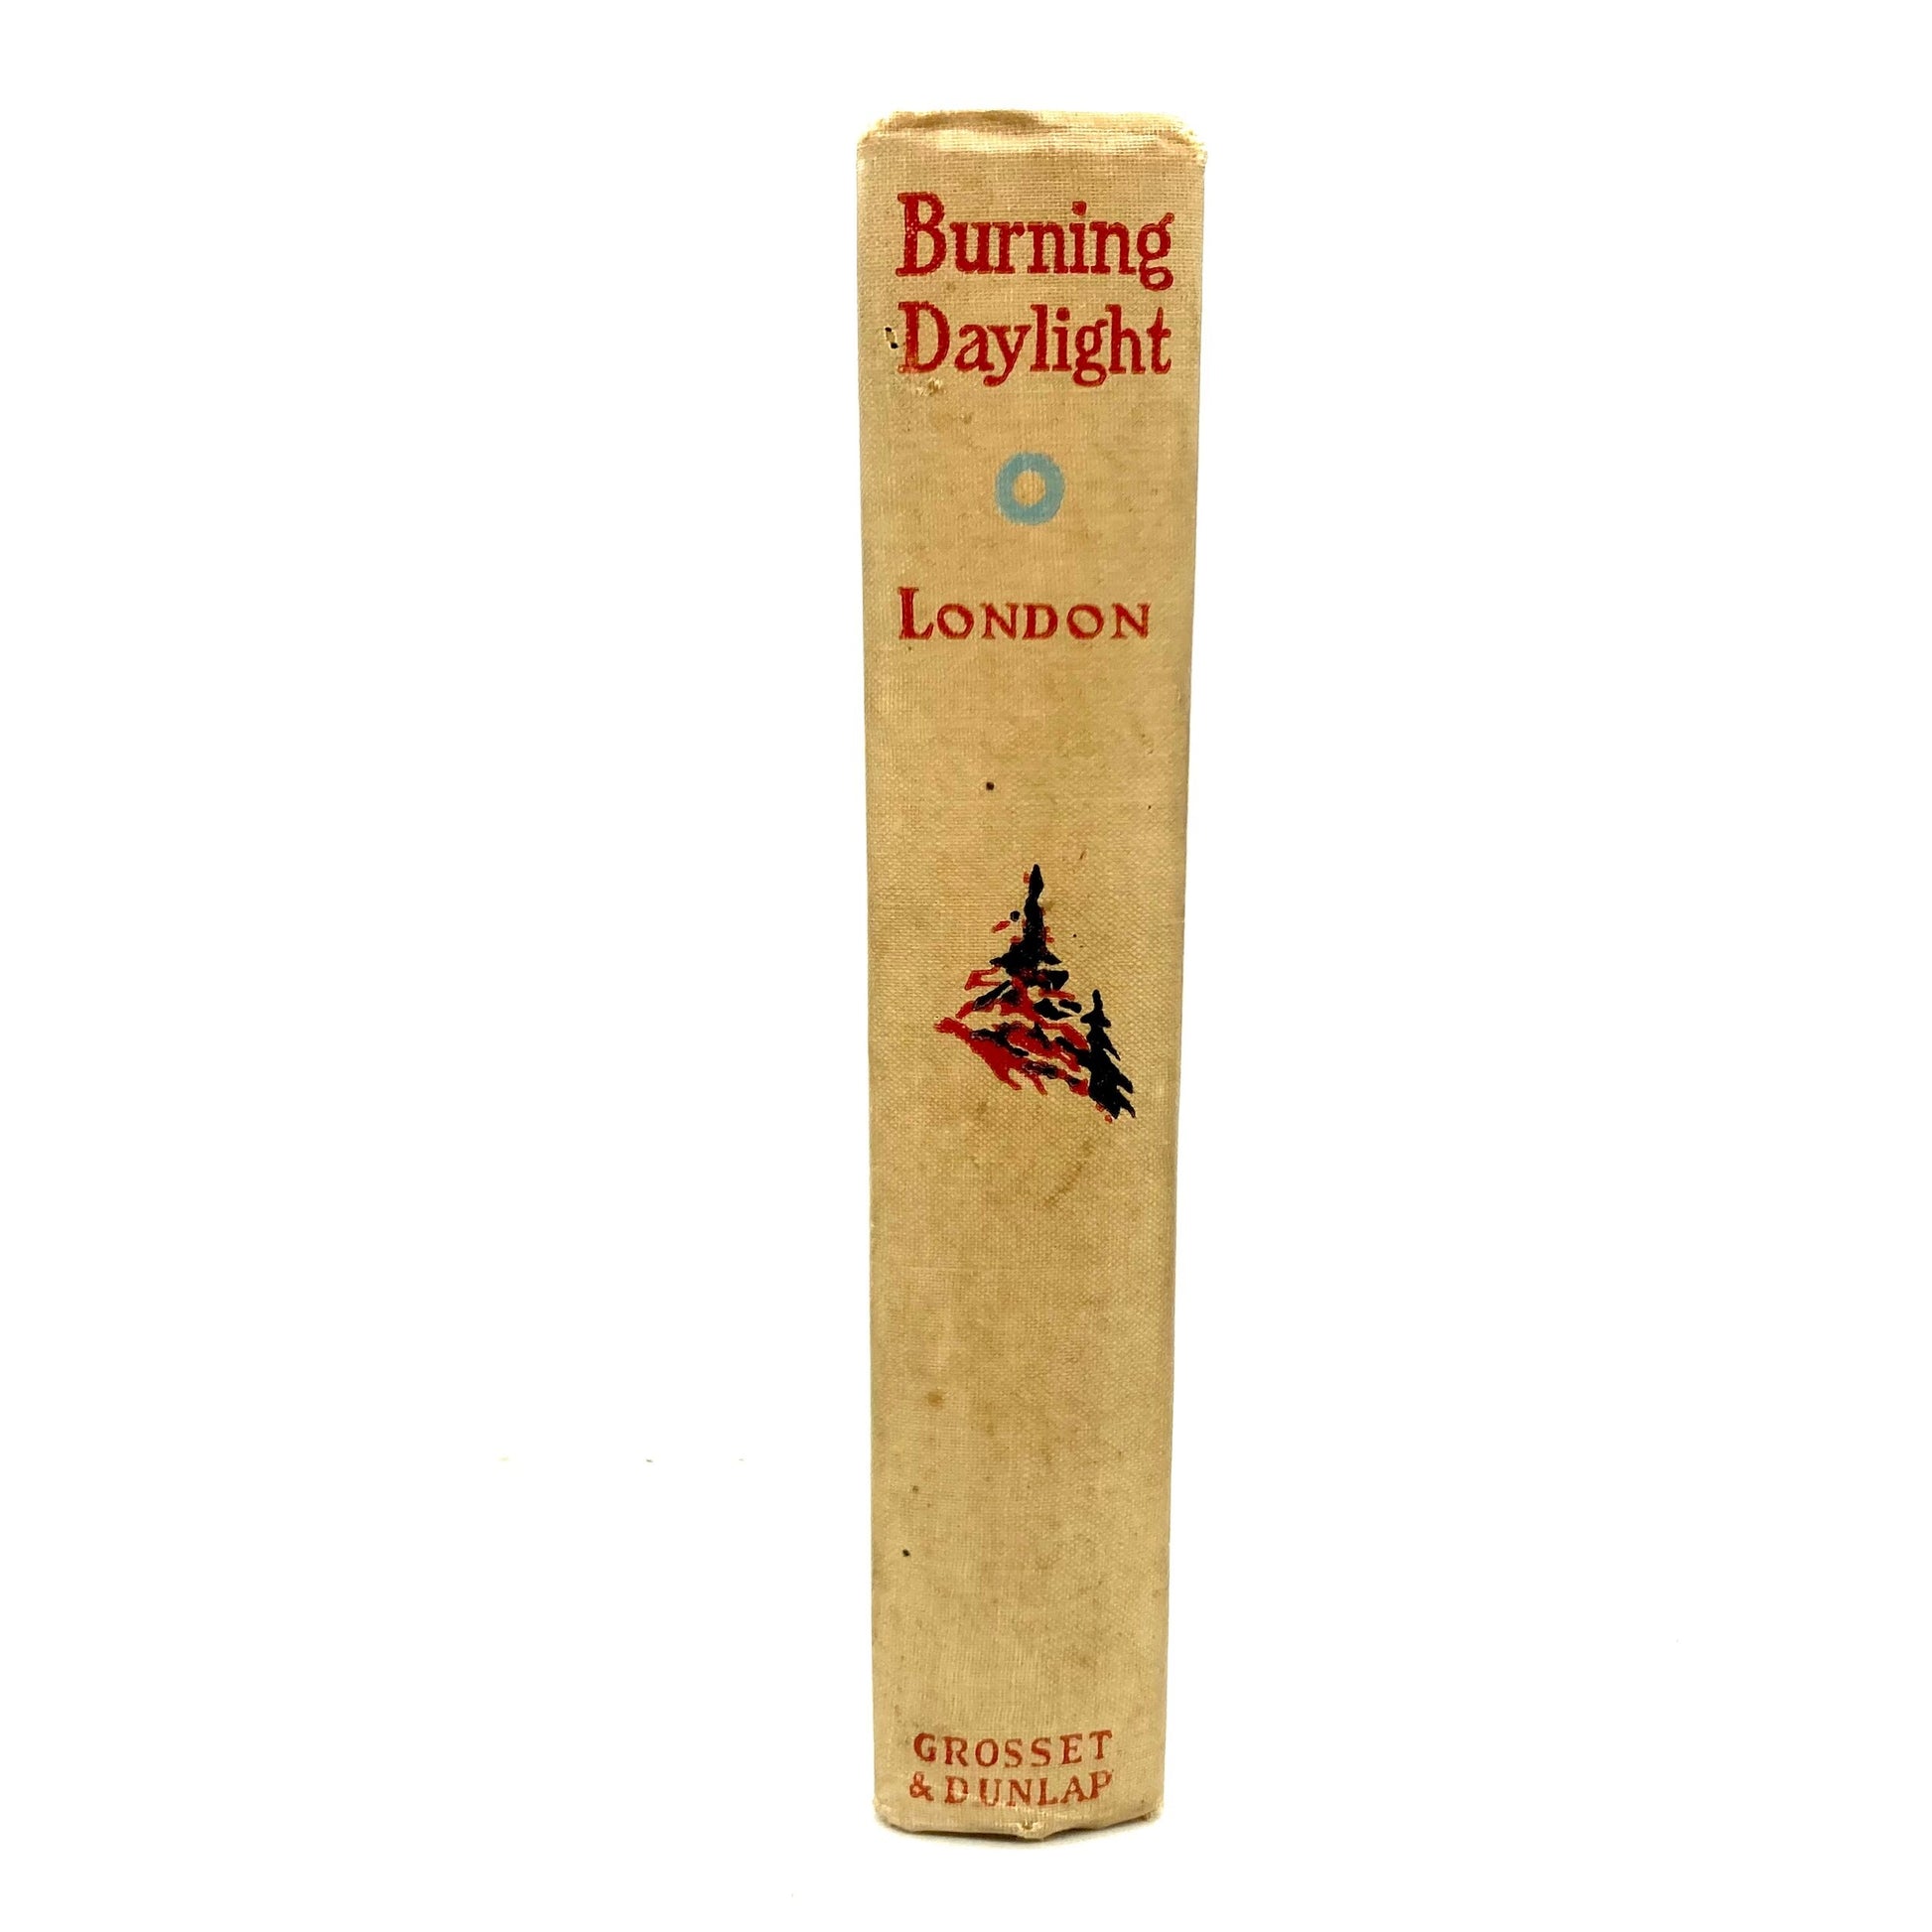 LONDON, Jack "Burning Daylight" [Grosset & Dunlap, 1916] - Buzz Bookstore